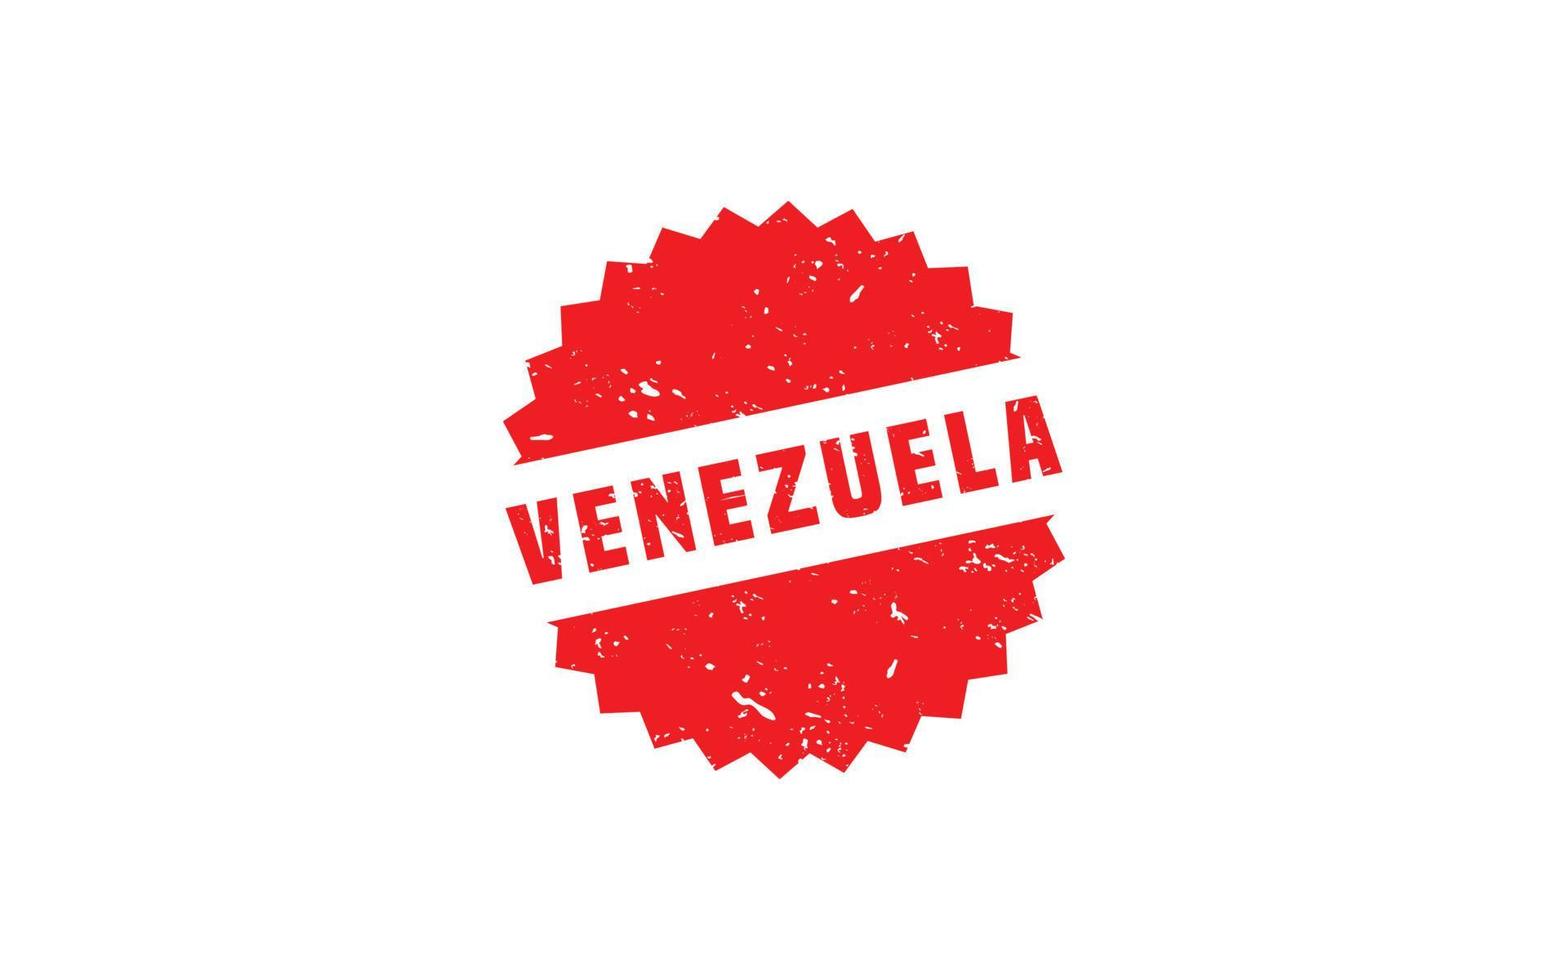 venezuela stämpel sudd med grunge stil på vit bakgrund vektor